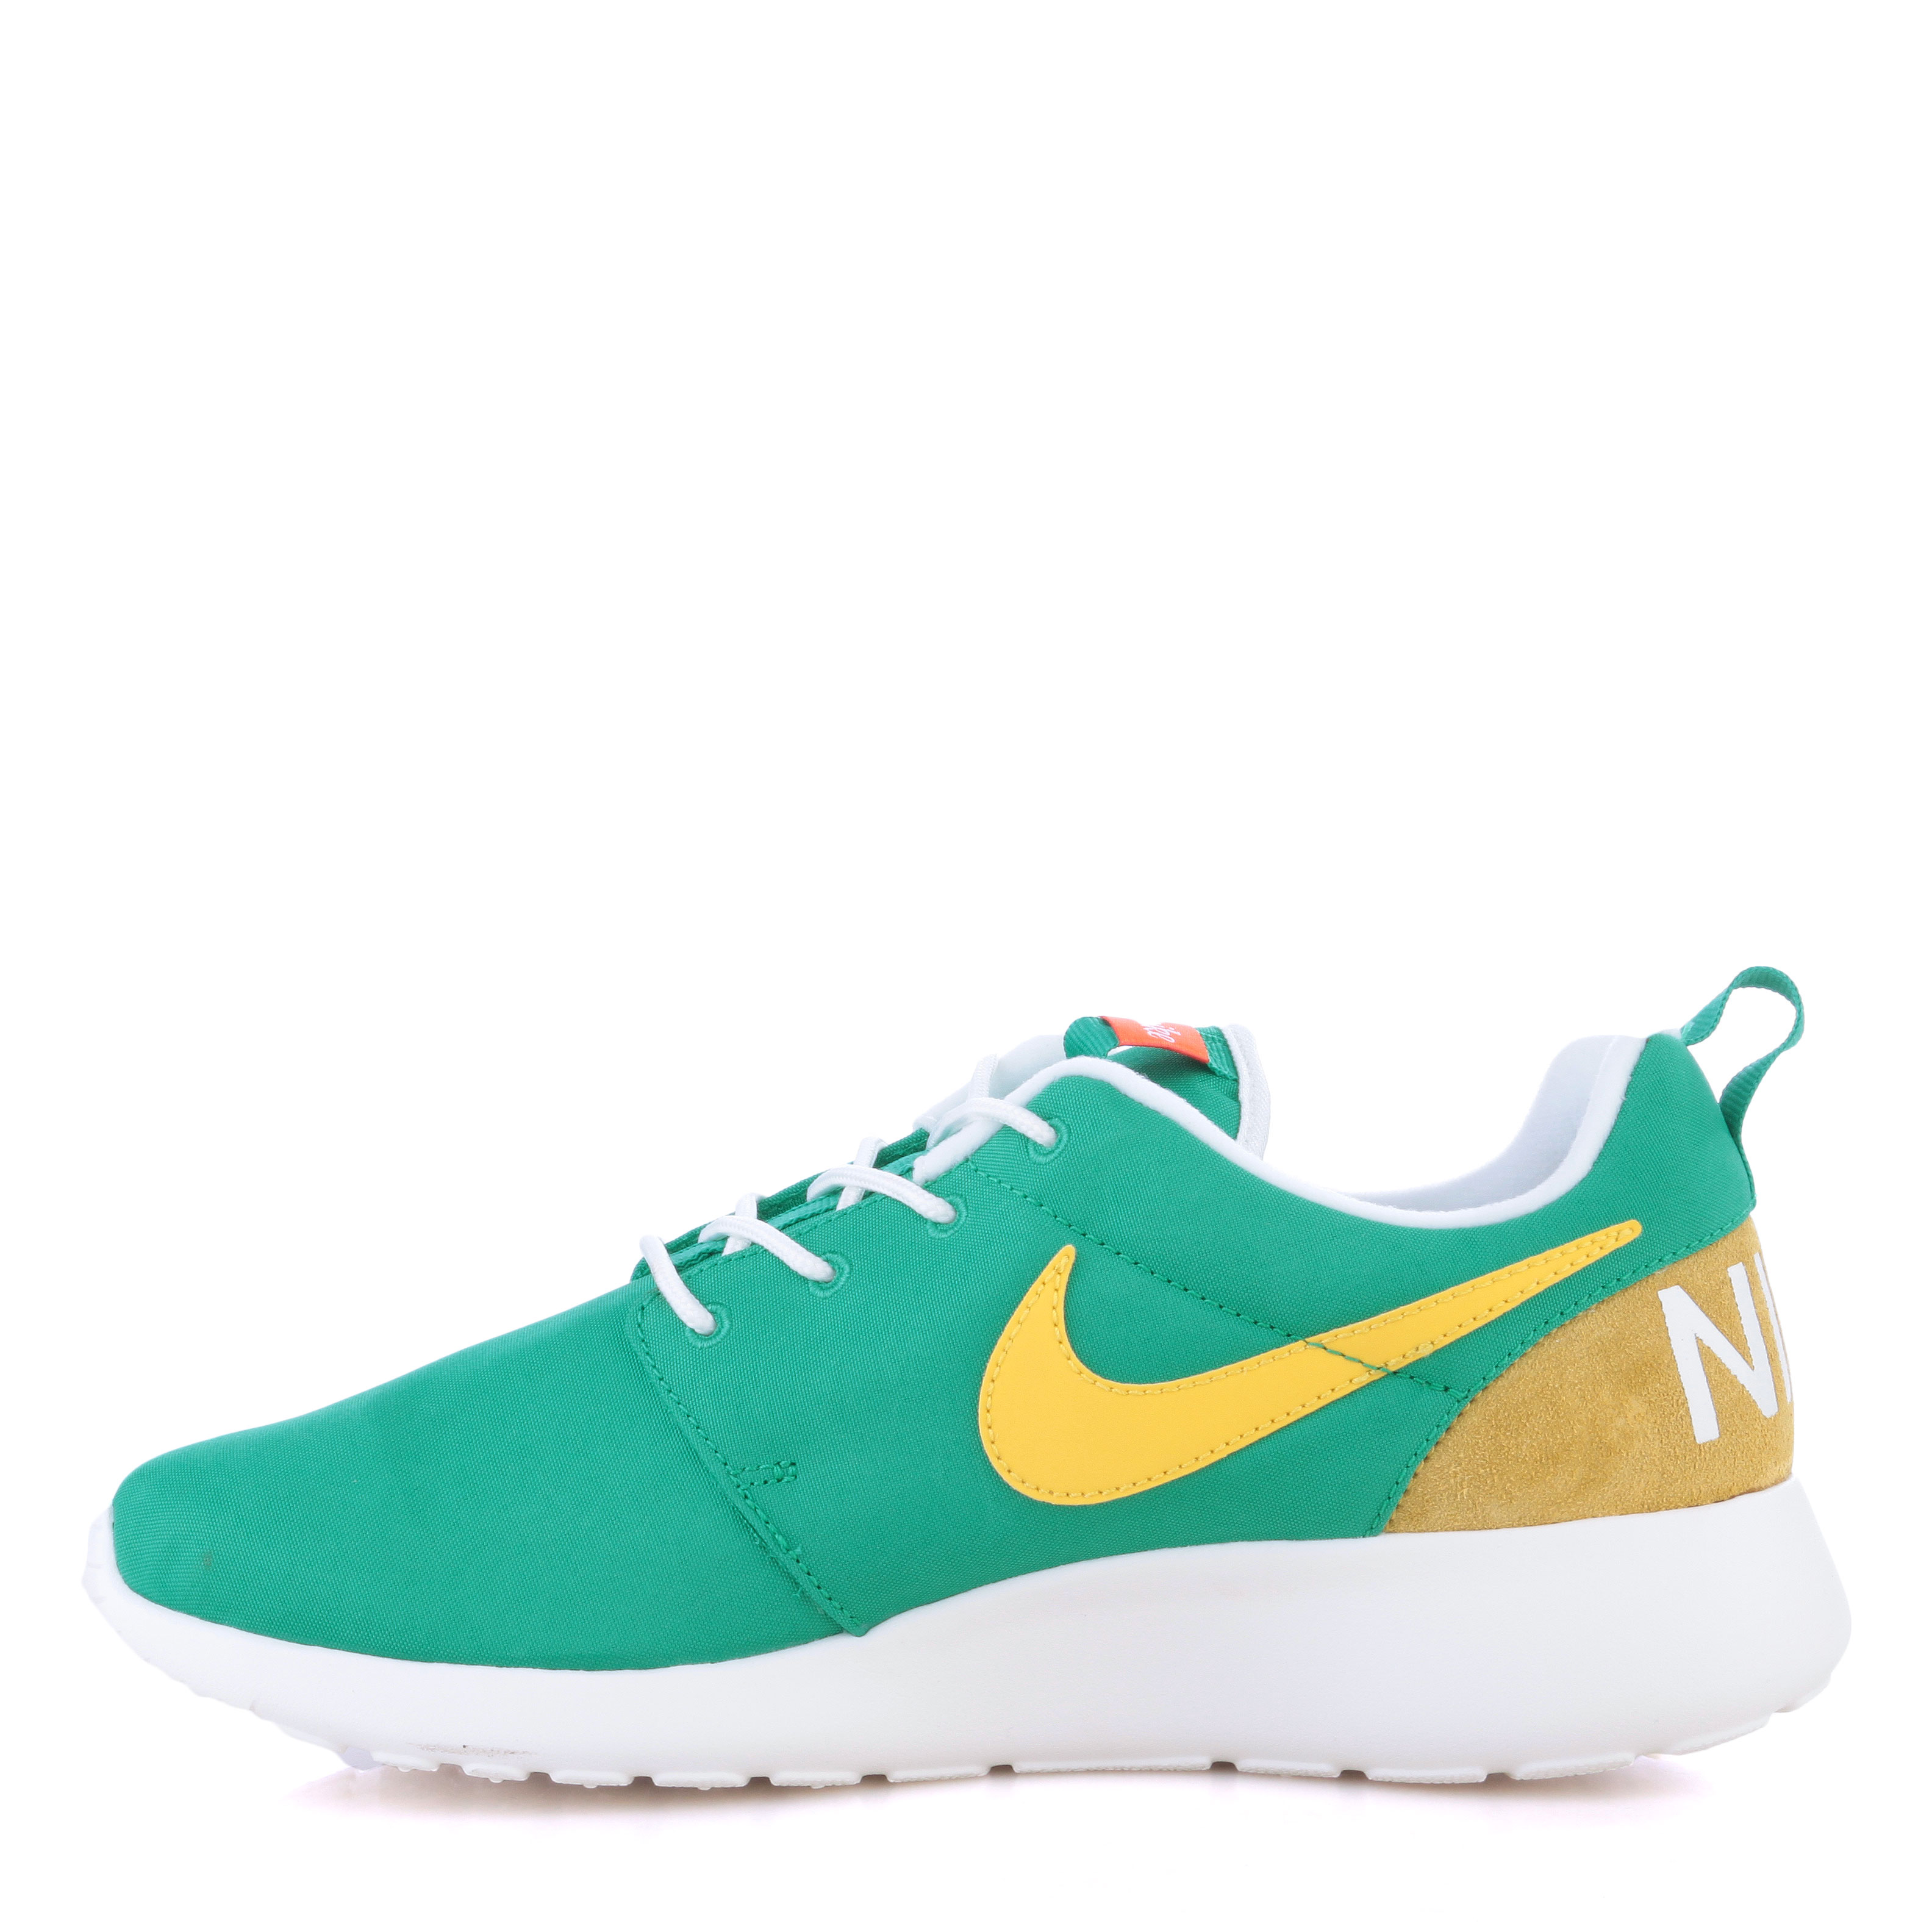 мужские зеленые кроссовки Nike Roshe One Retro 819881-371 - цена, описание, фото 3